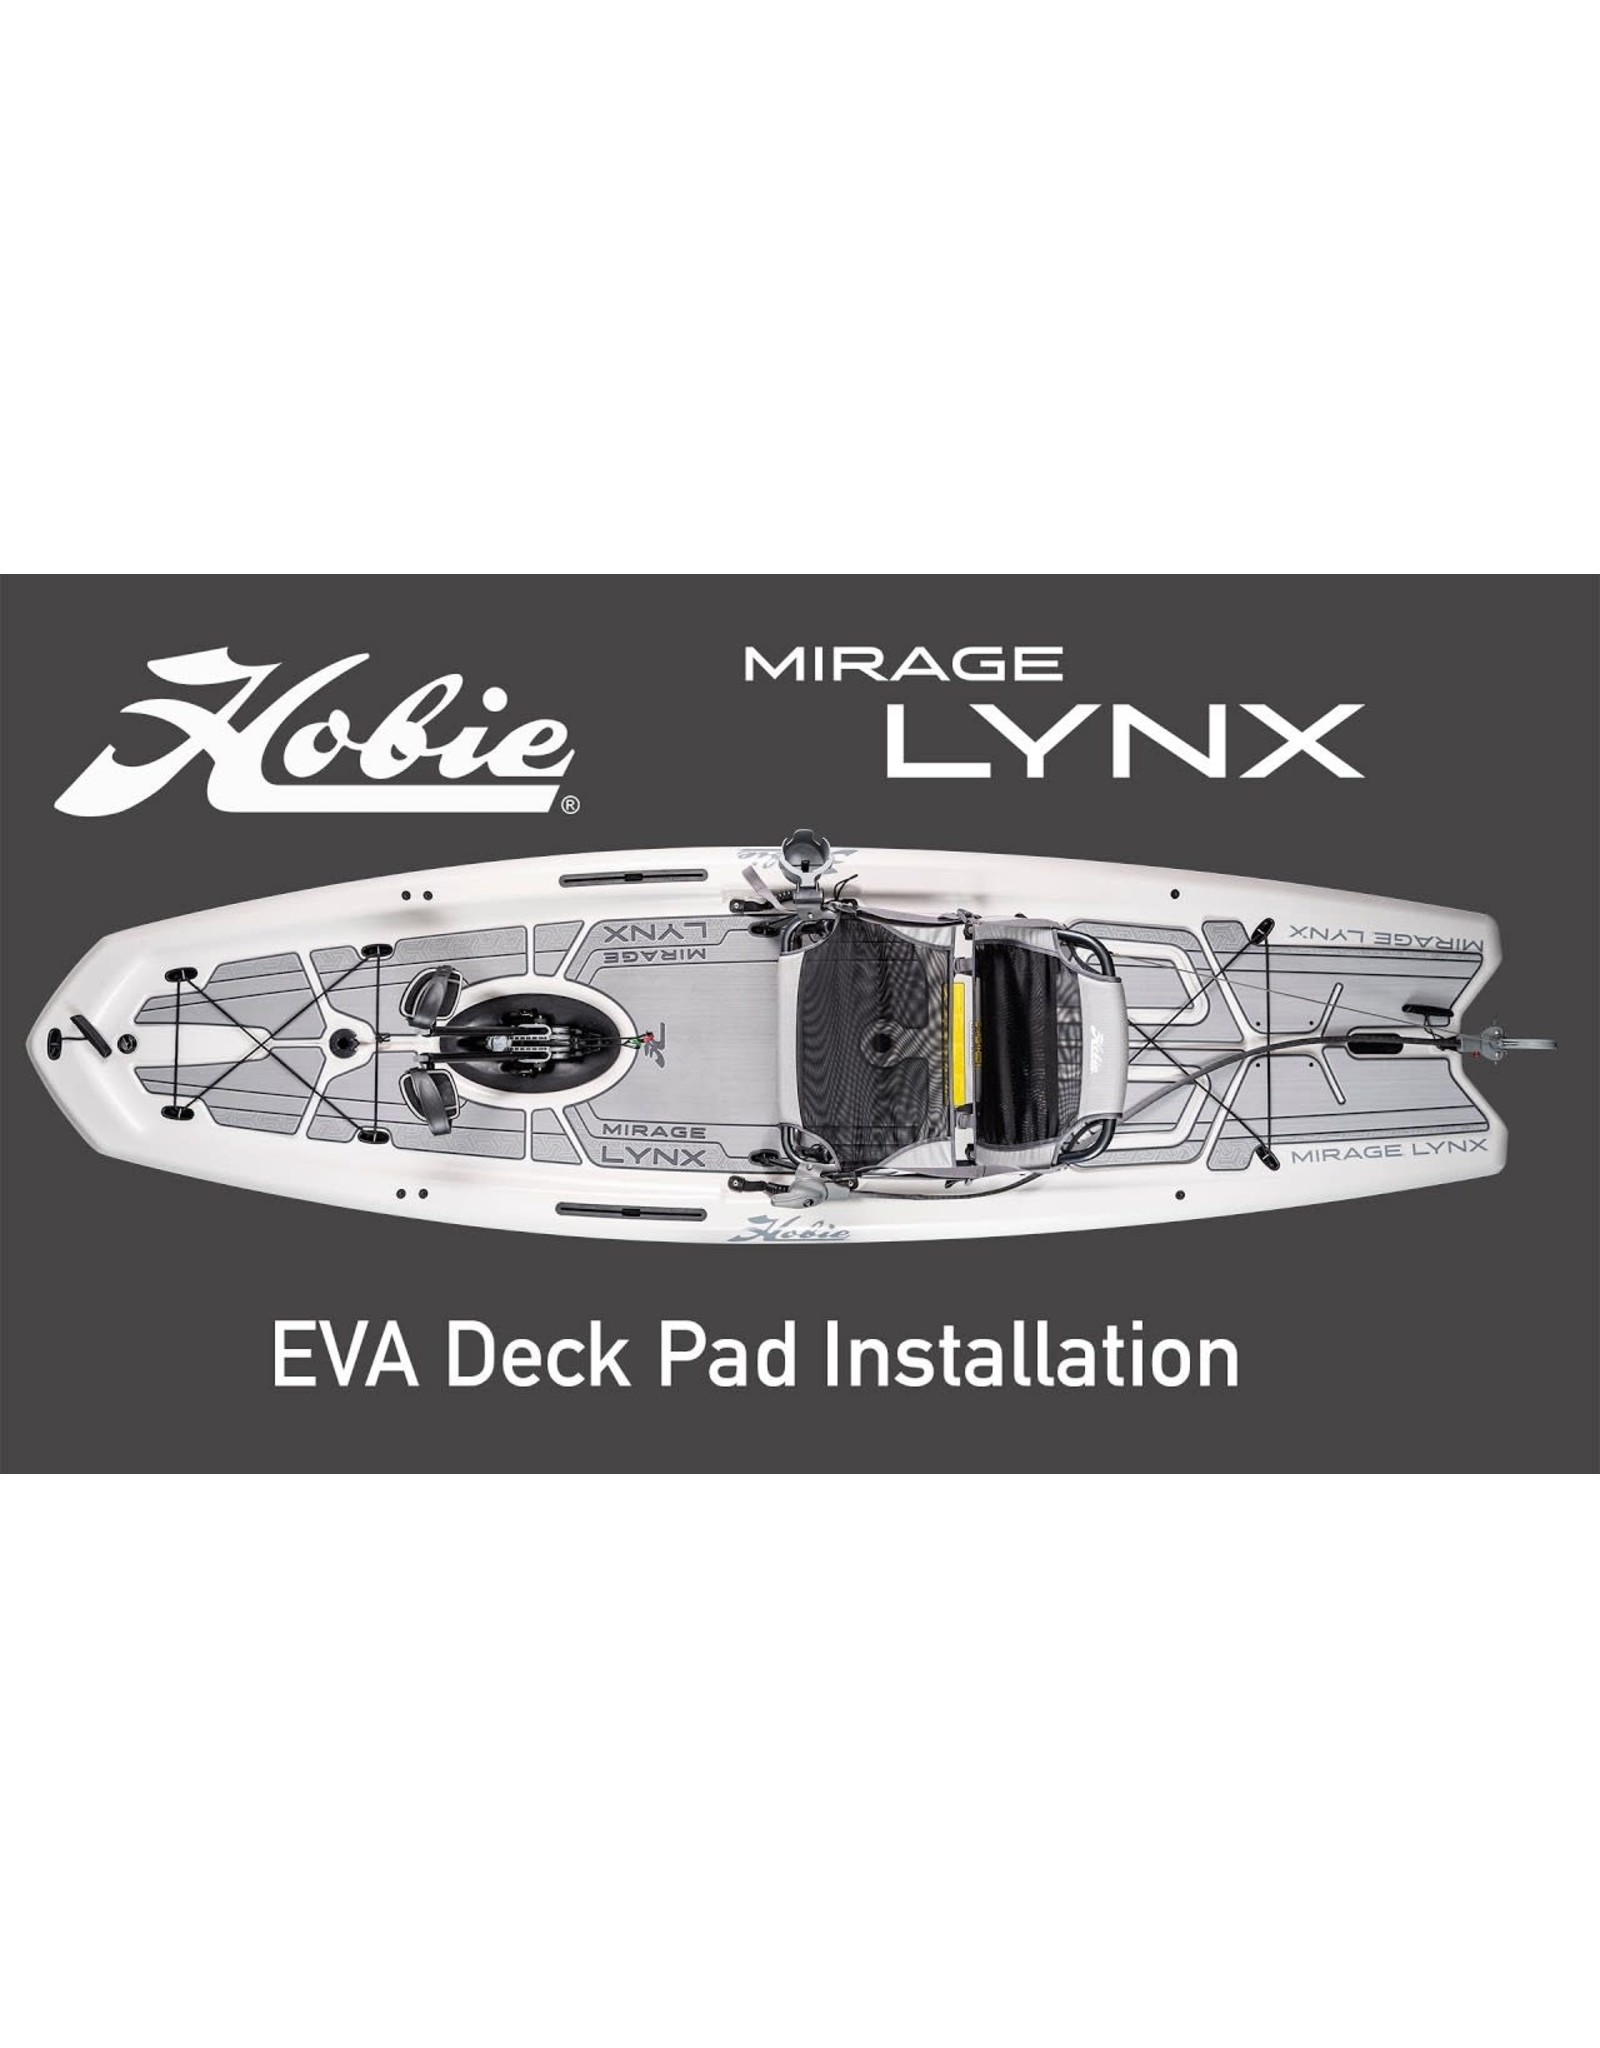 Hobie Hobie Lynx Deck Pad Expansion Kit - 72020305 4MM Grey/Charcoal